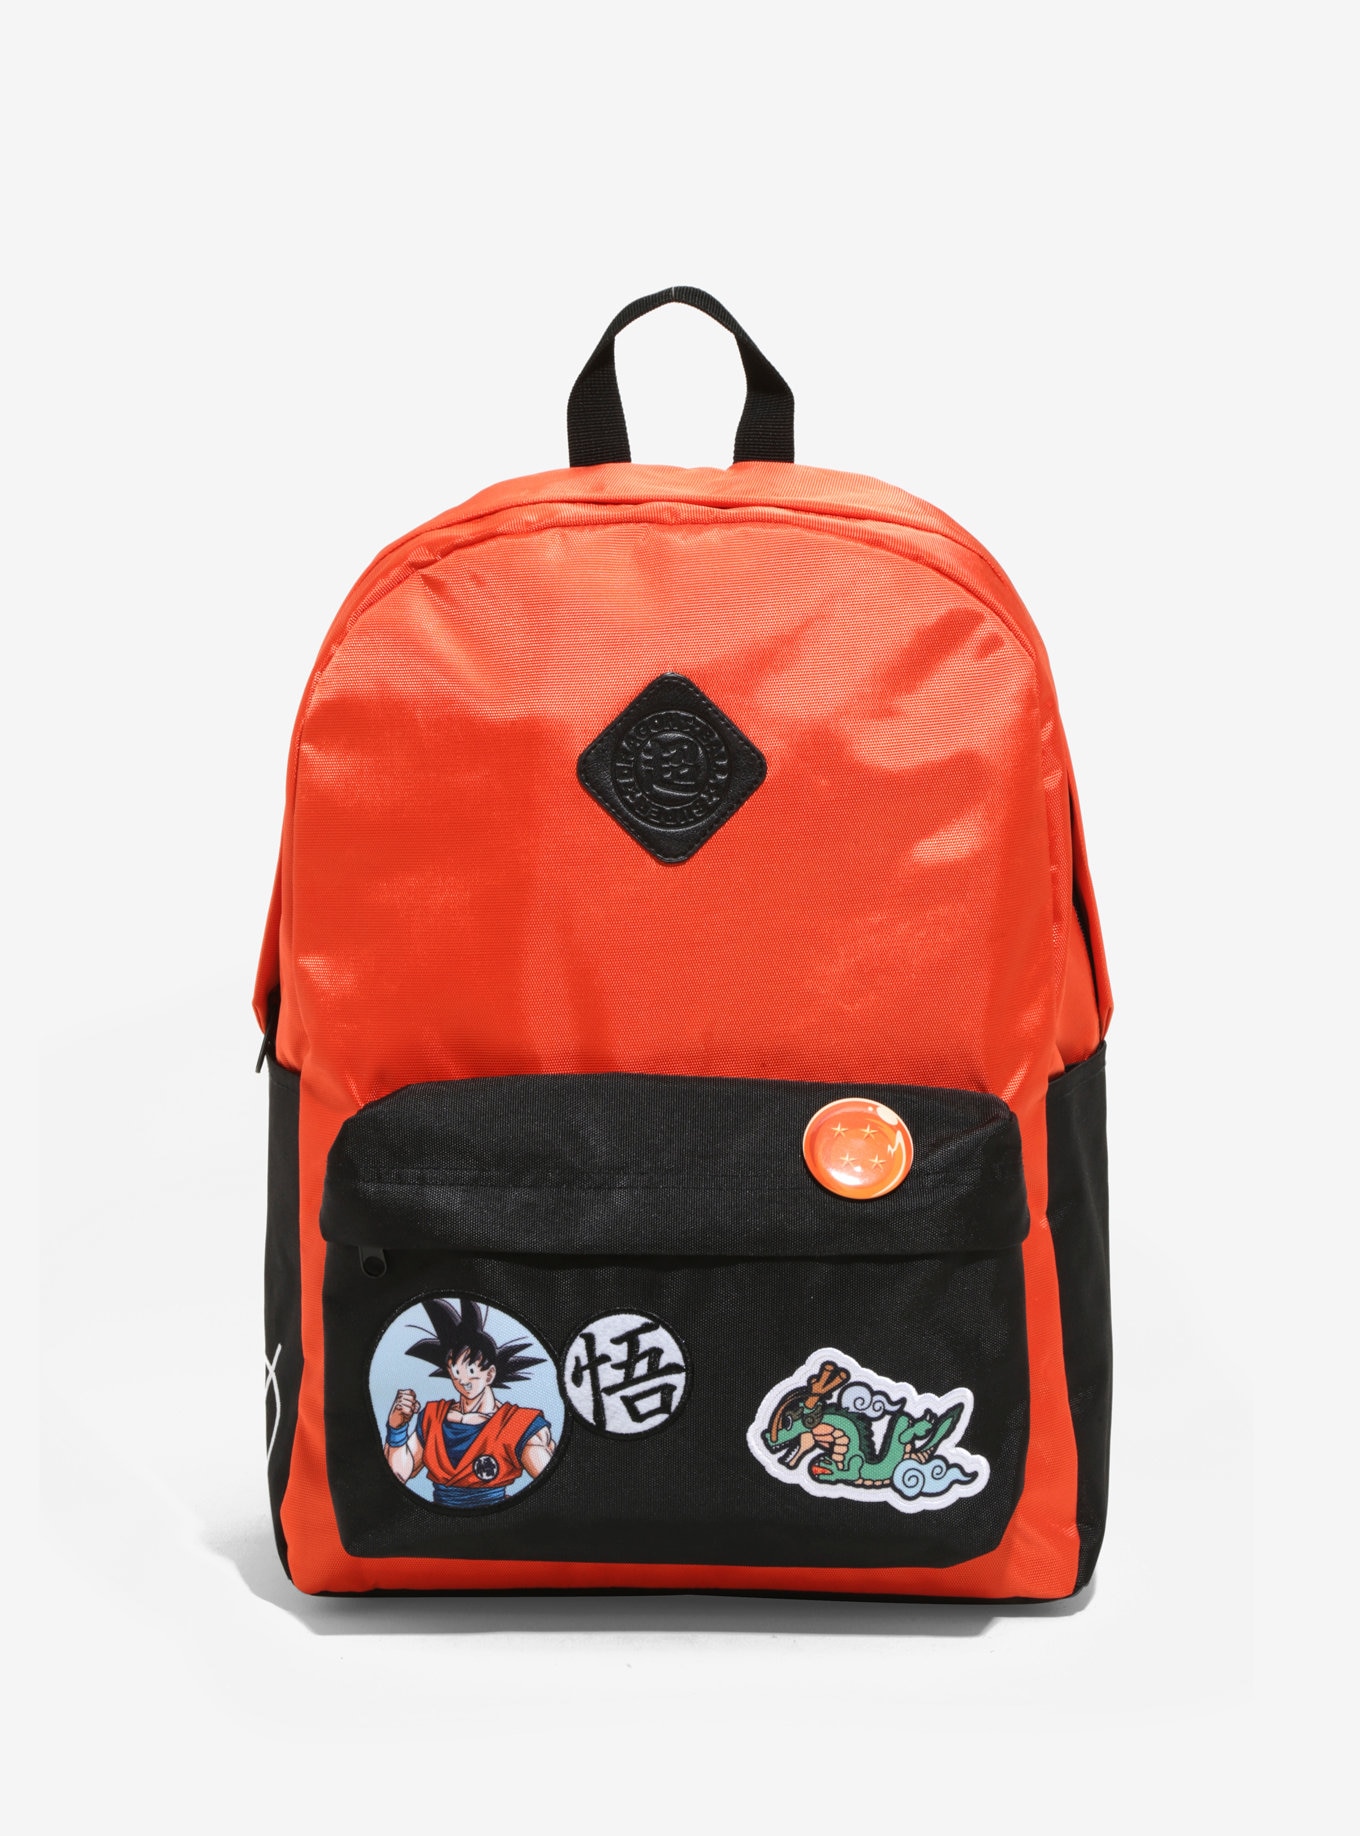 Bioworld Dragon Ball Super Patches Backpack BookBag Orange